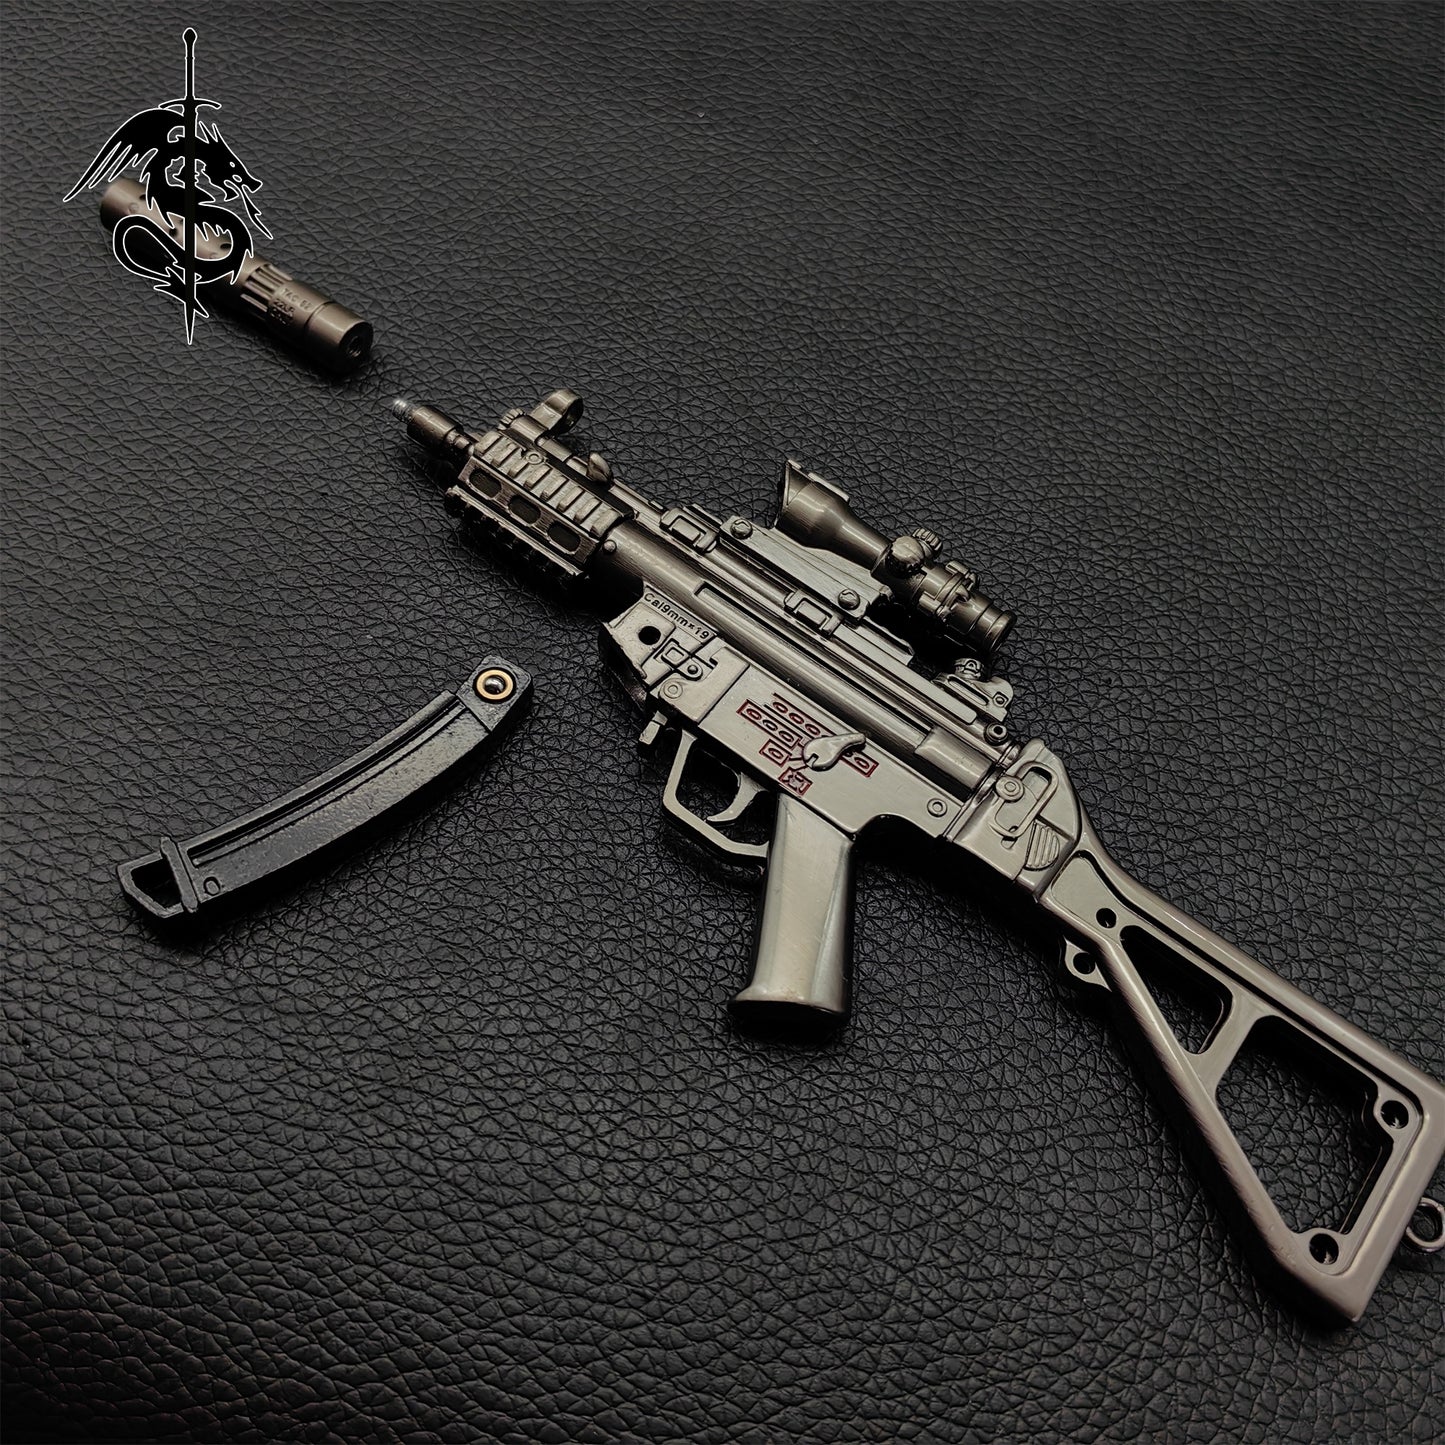 MP5K Miniature Tiny Mp5 SMG Submachine Gun Small Metal Replica